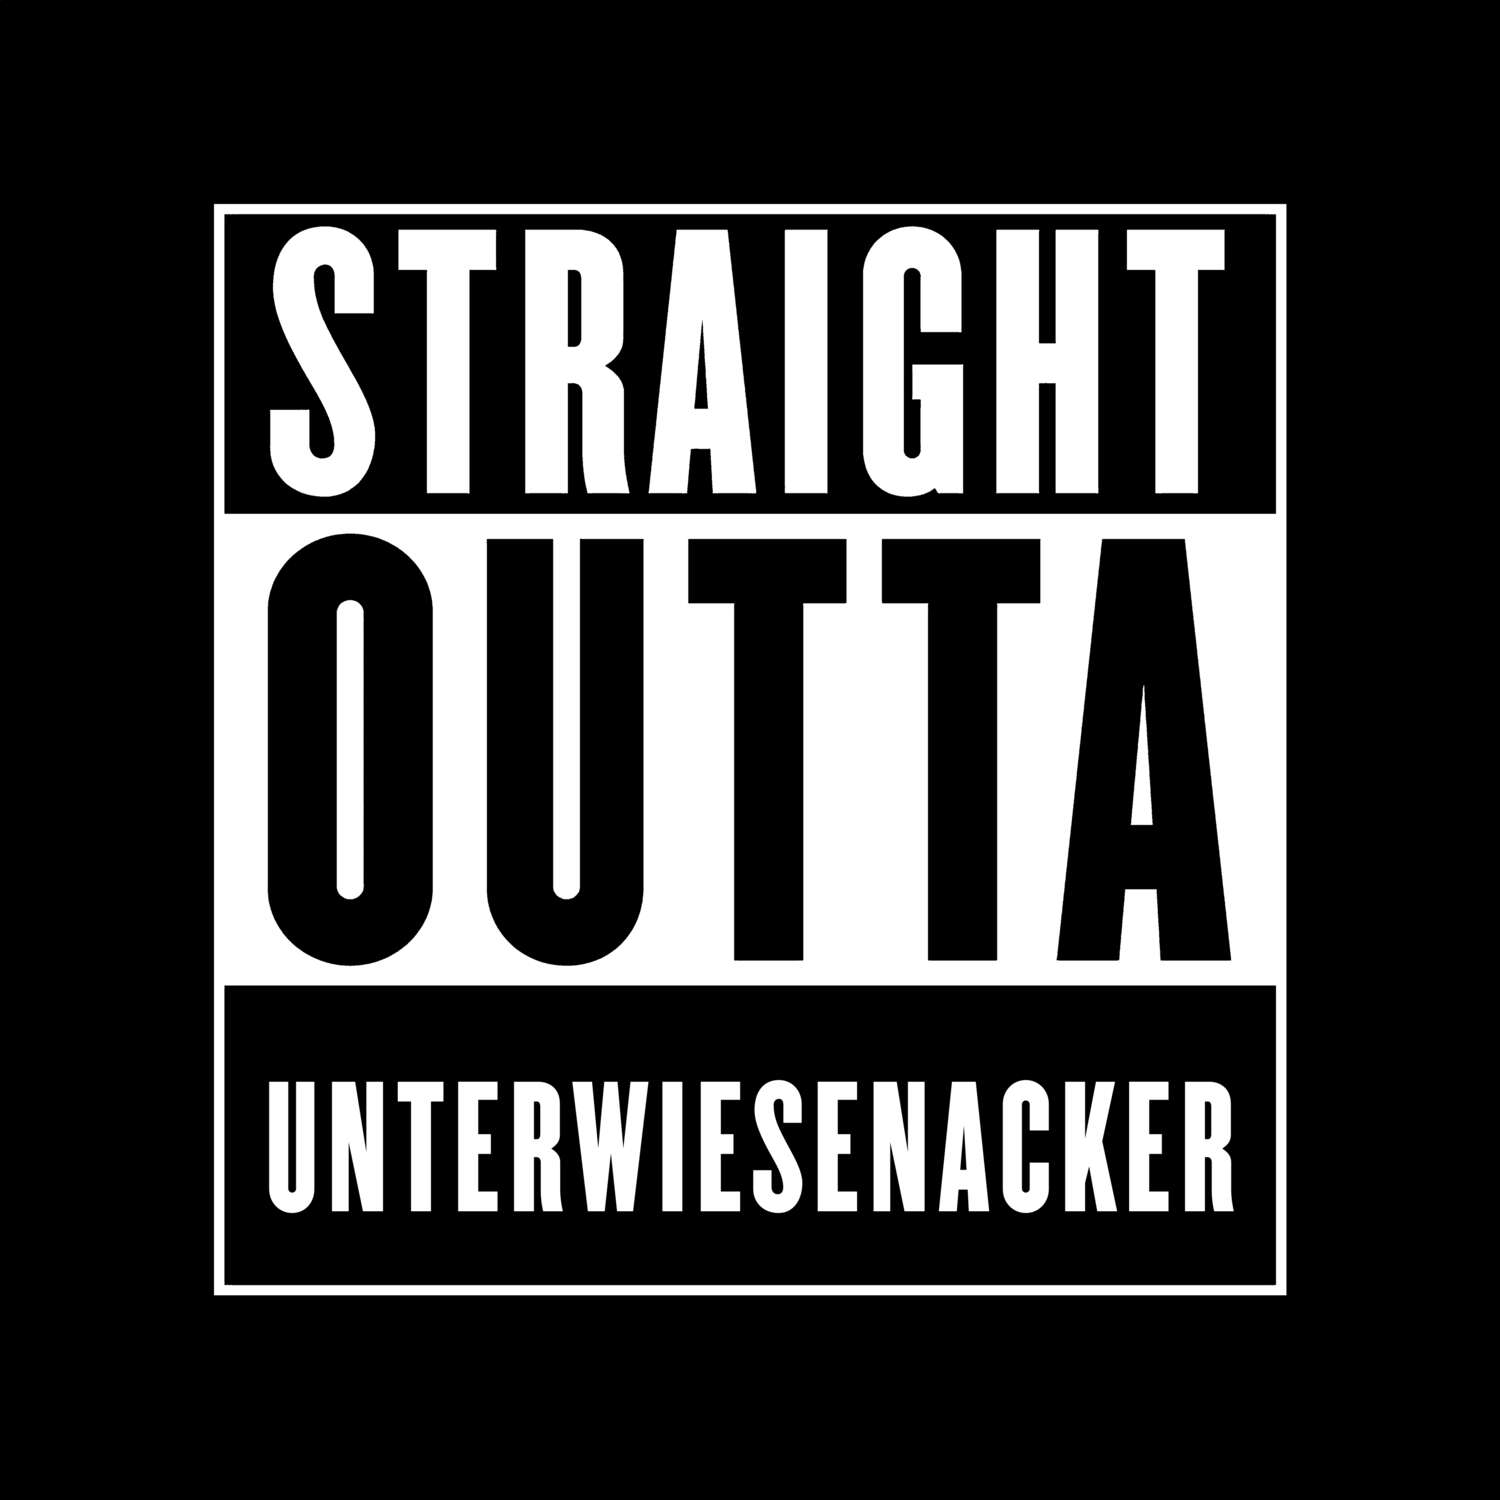 Unterwiesenacker T-Shirt »Straight Outta«